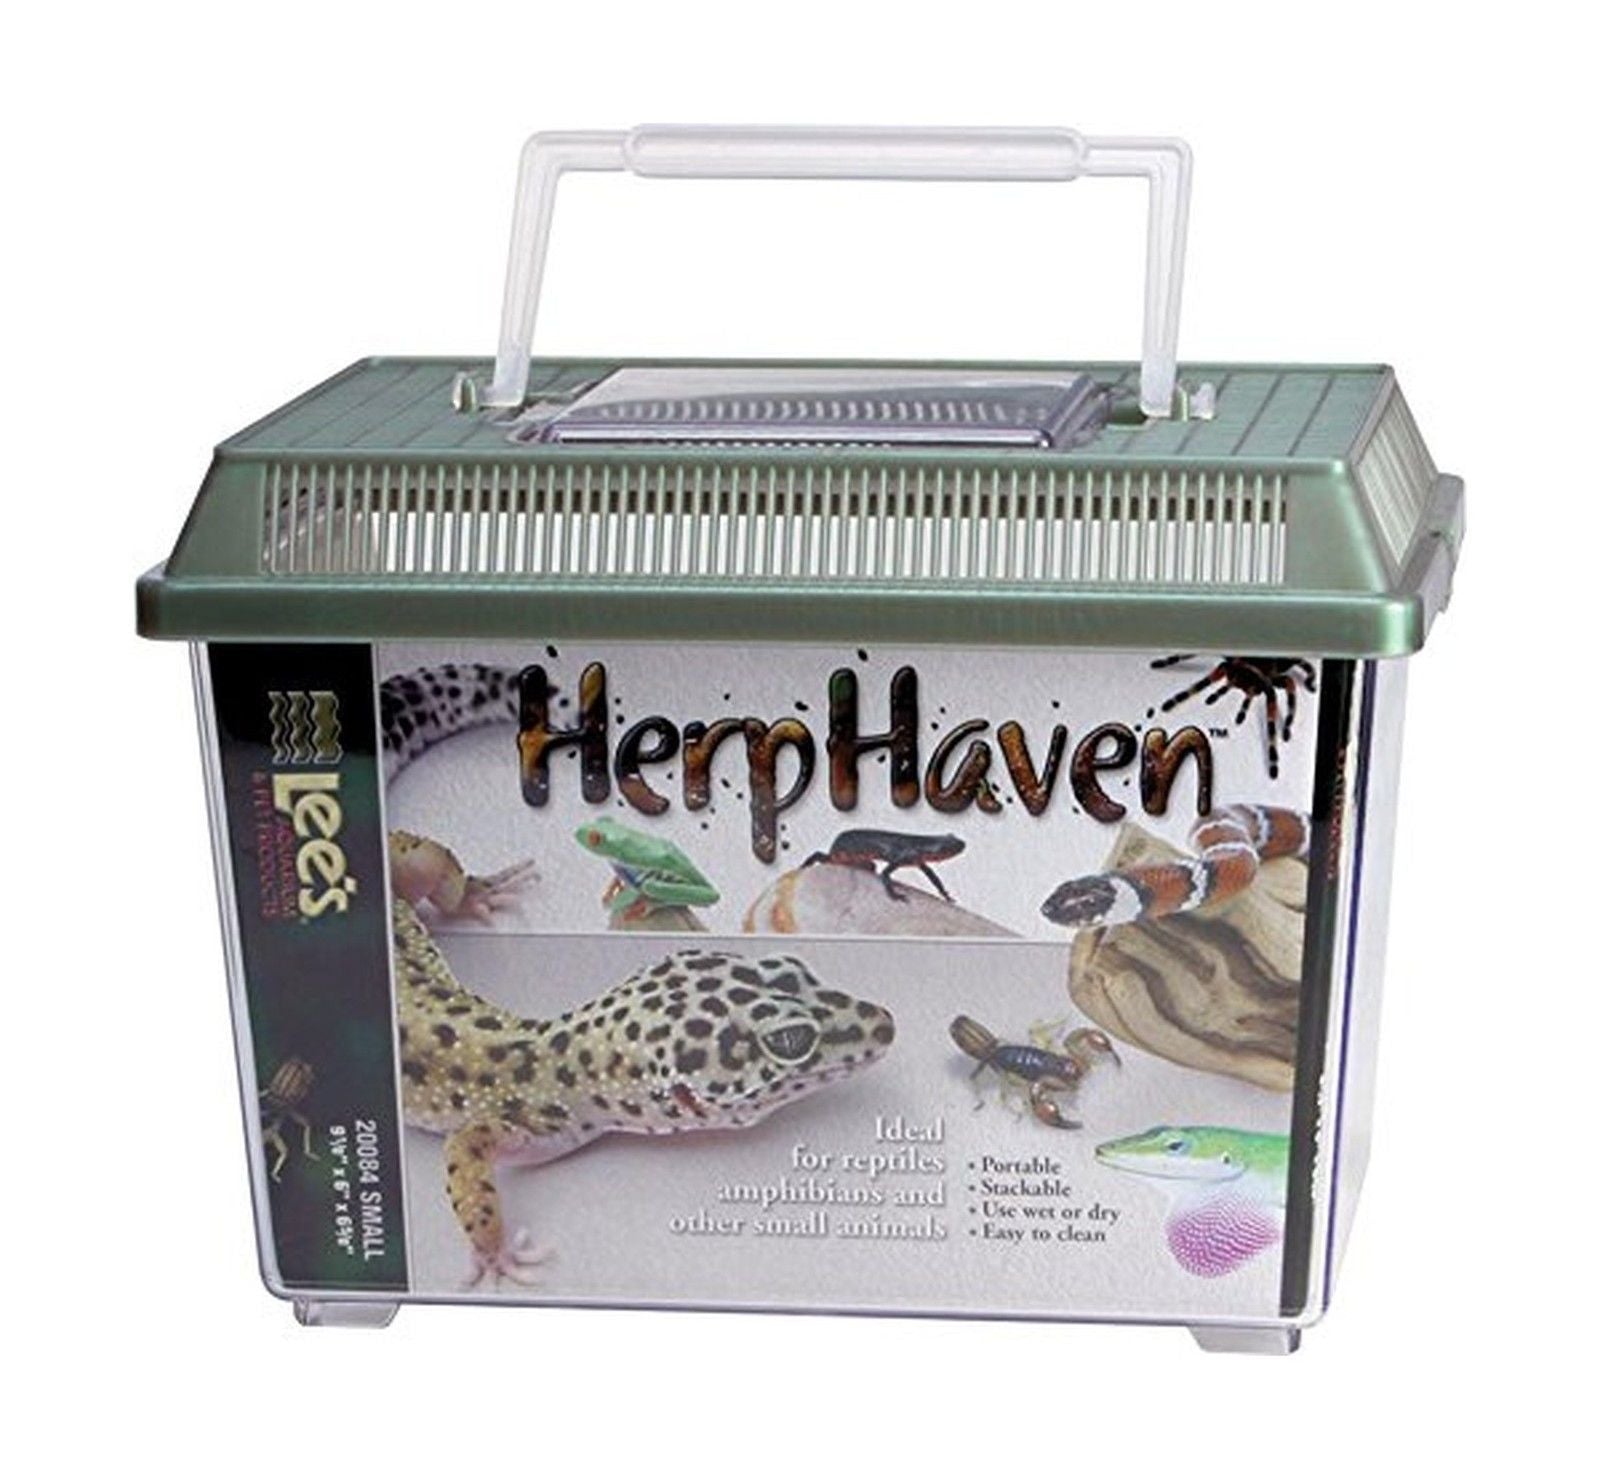 Lees Aquarium Herphaven Rectangle Reptile Carrier